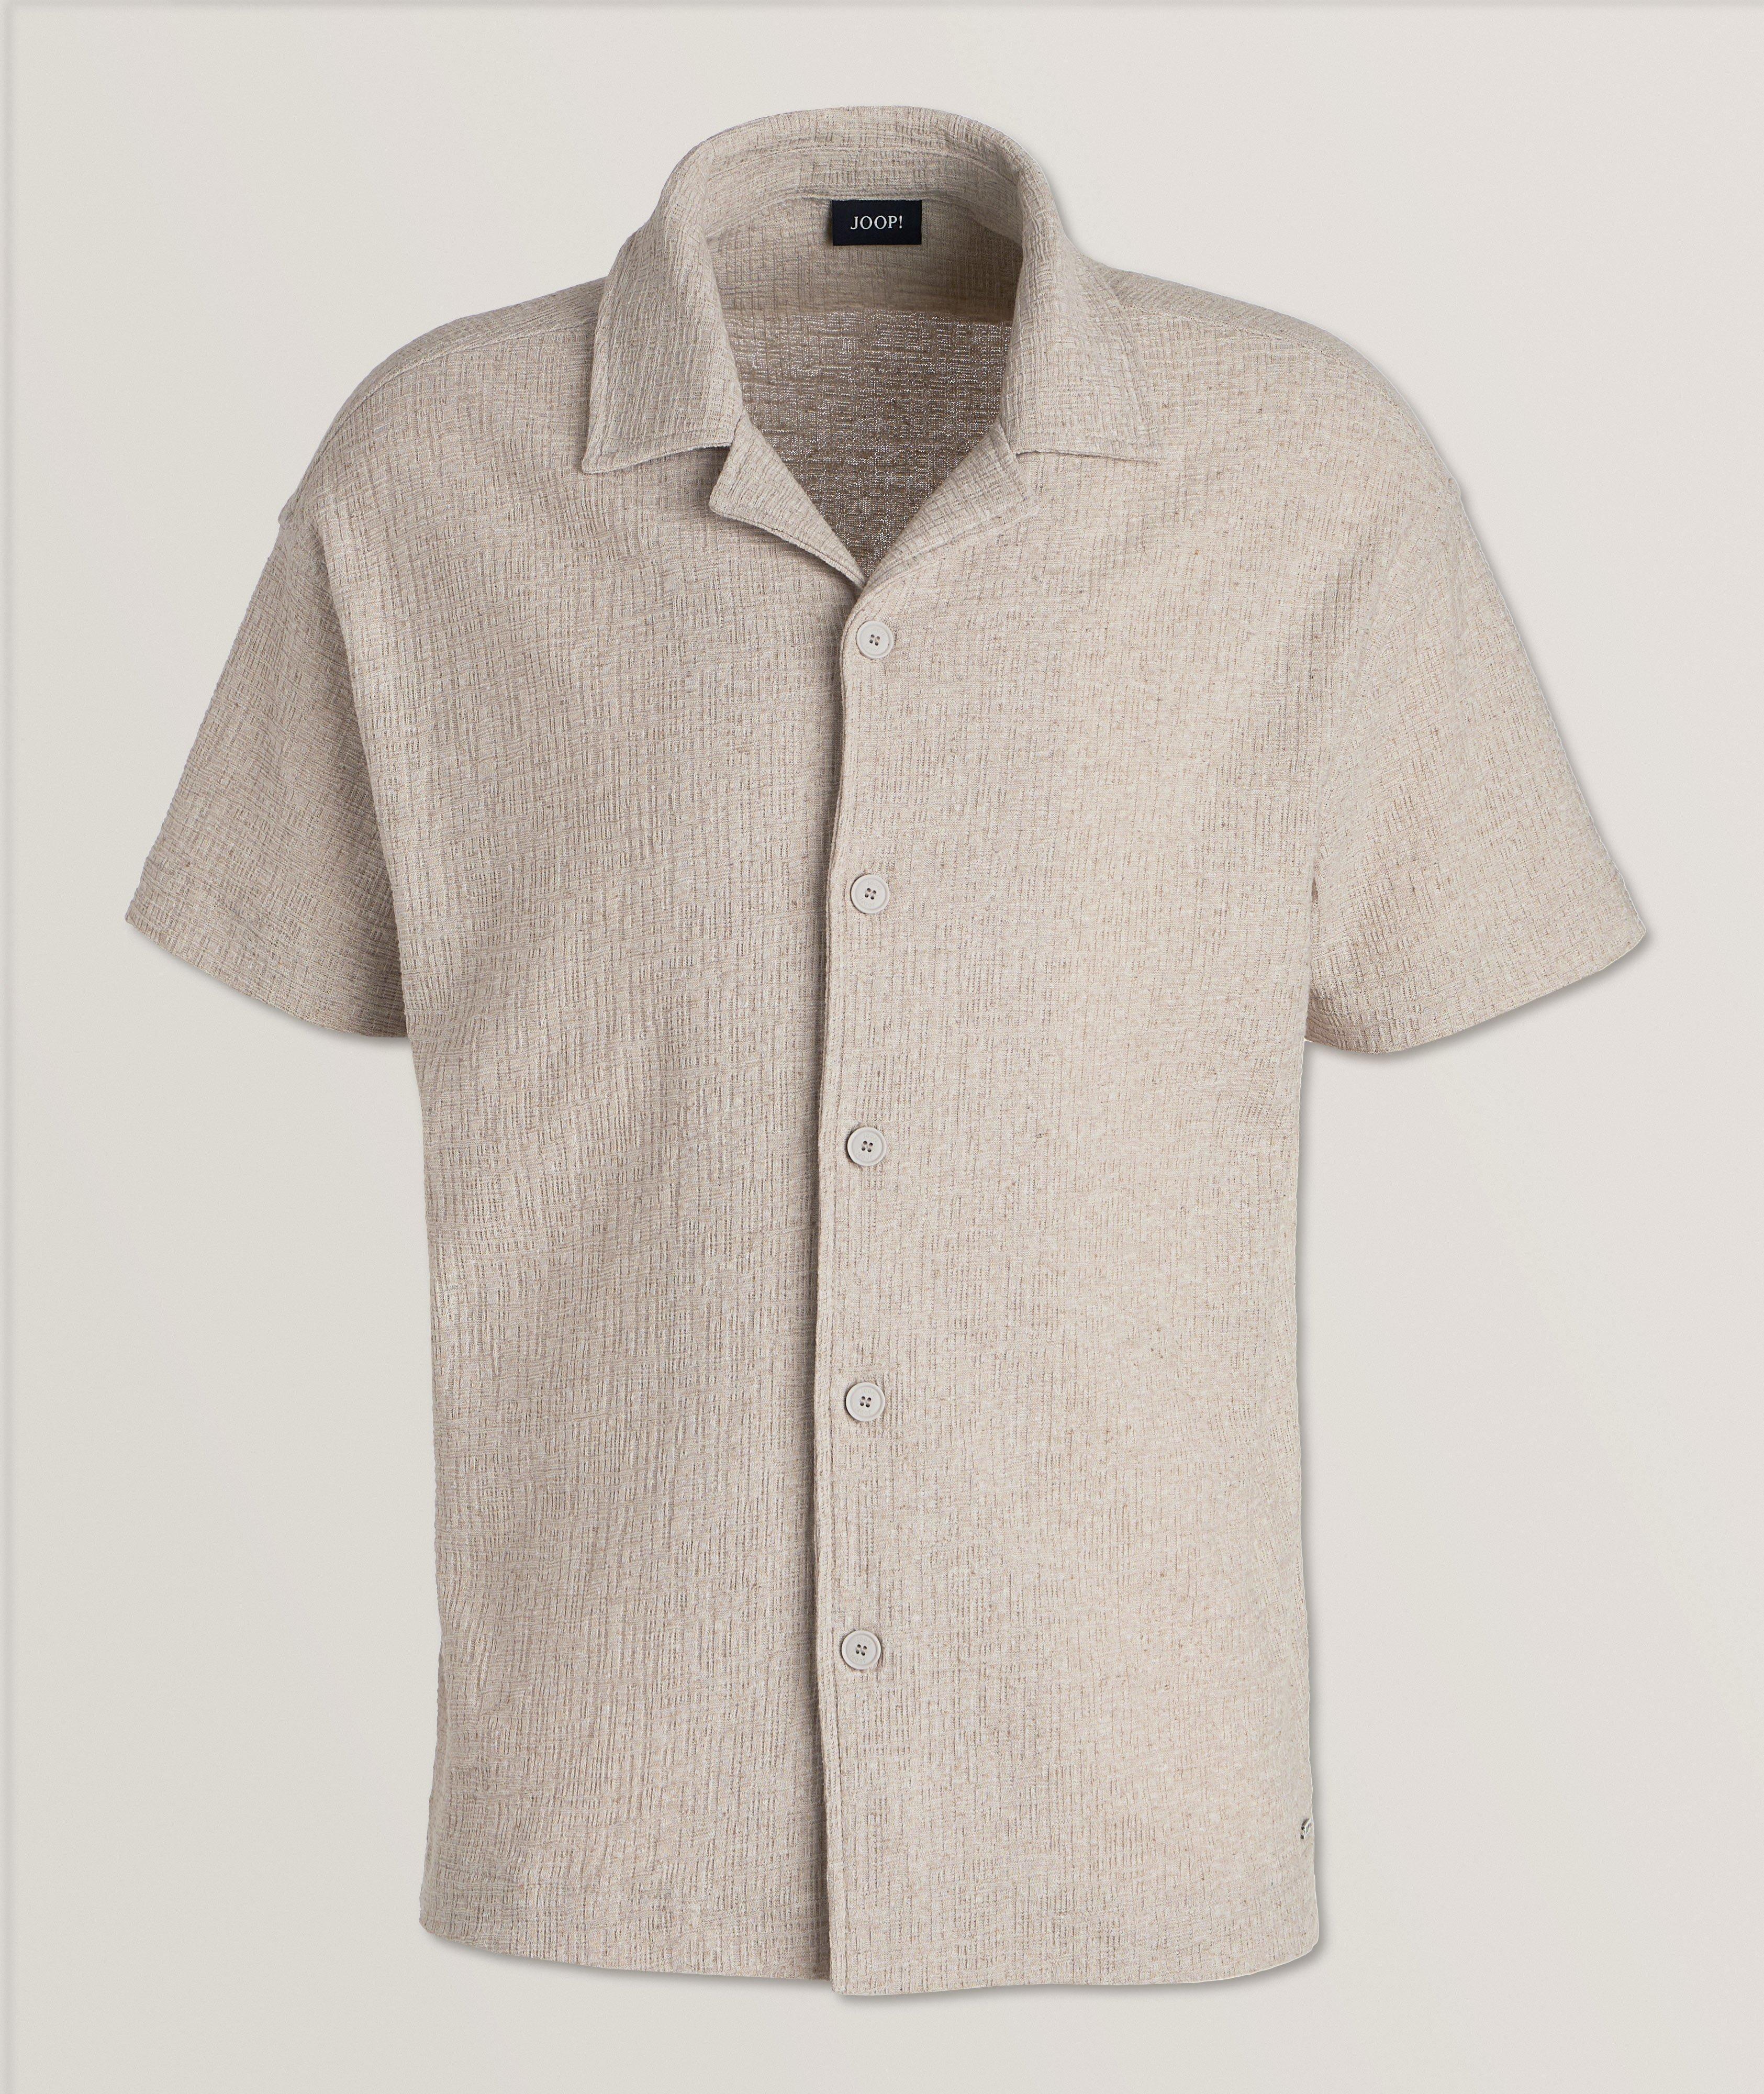 JOOP! Tate Textured Cotton-Blend Camp Shirt 